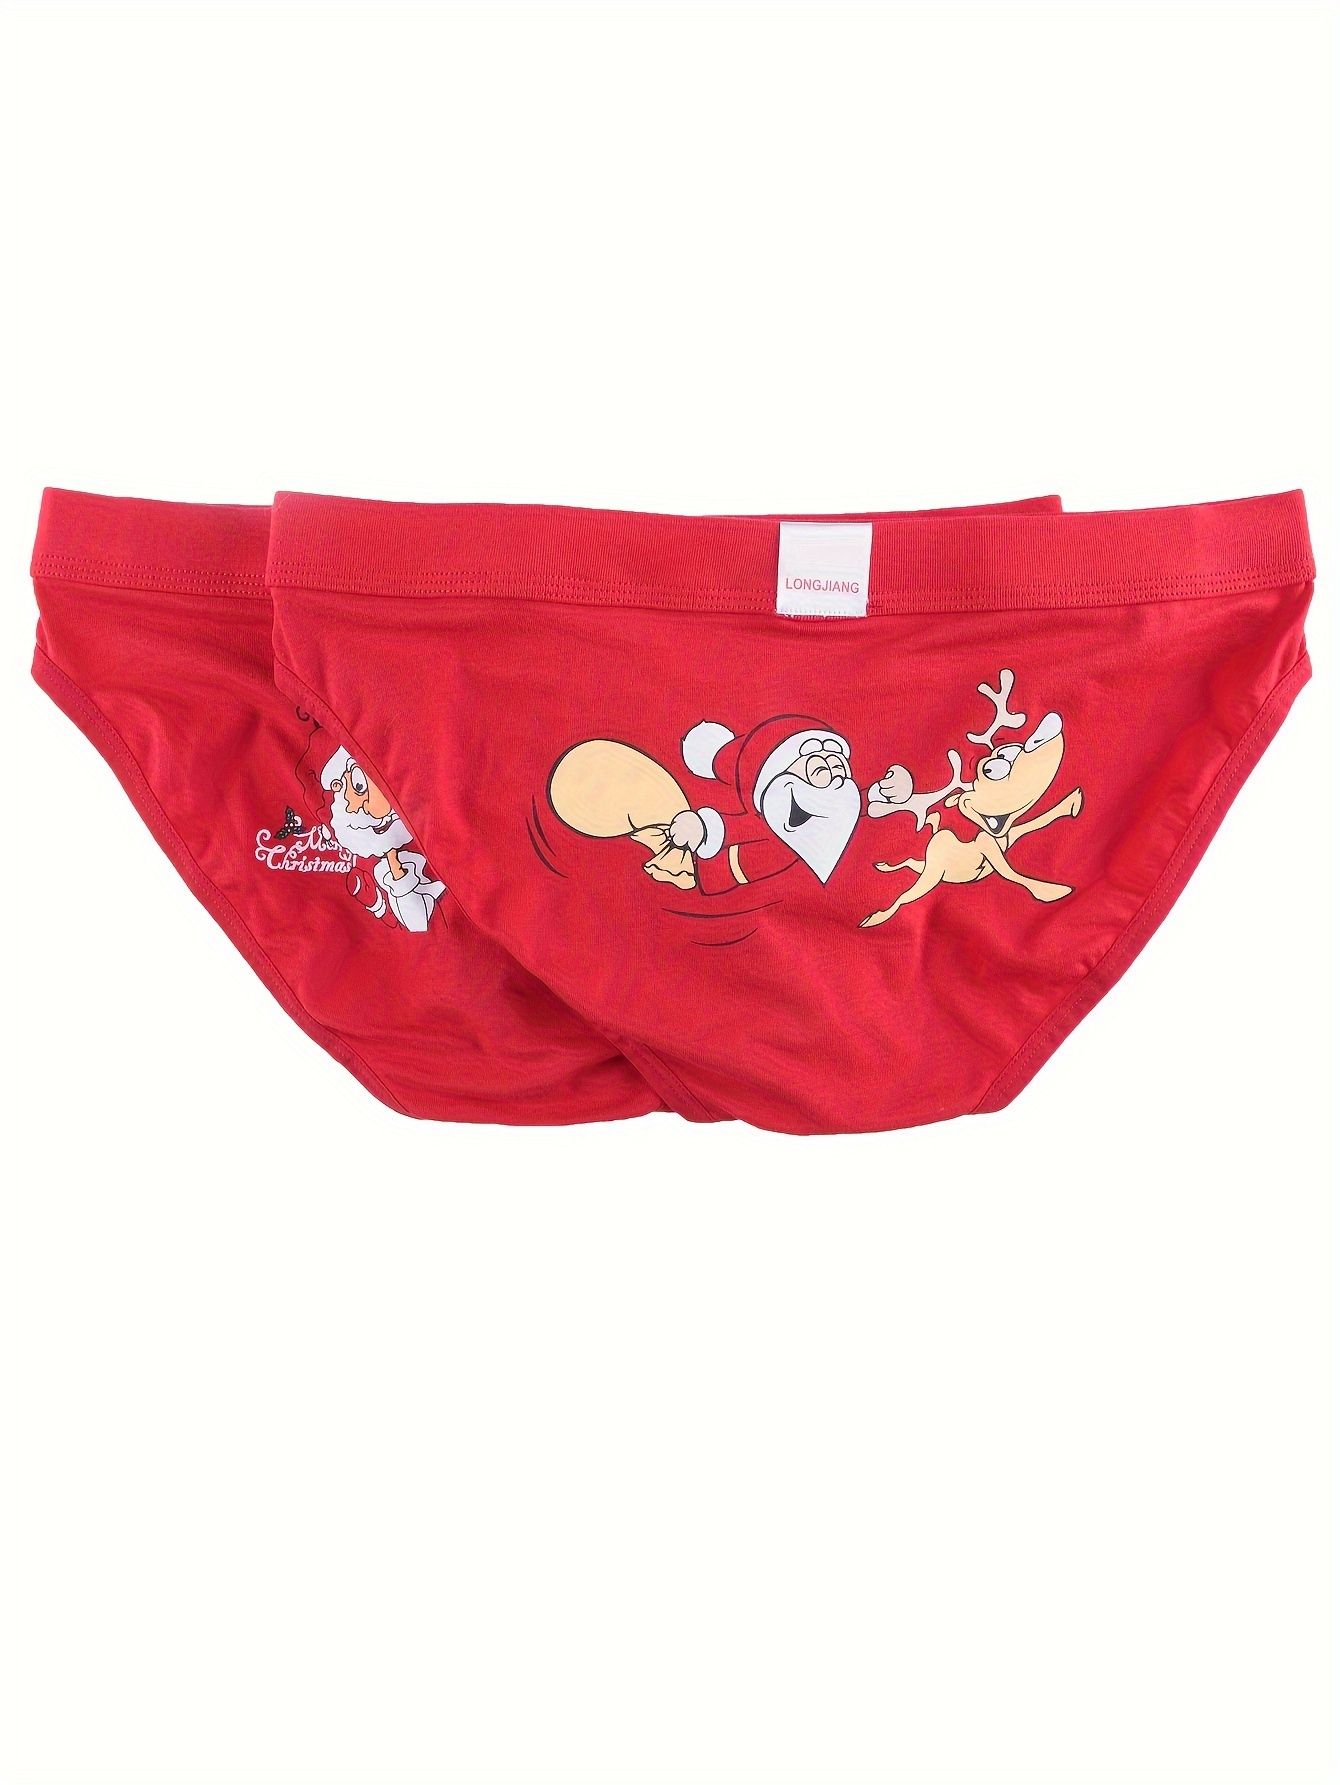 Men Christmas Xmas Boxer Briefs Underwear Panties Knickers Underpants